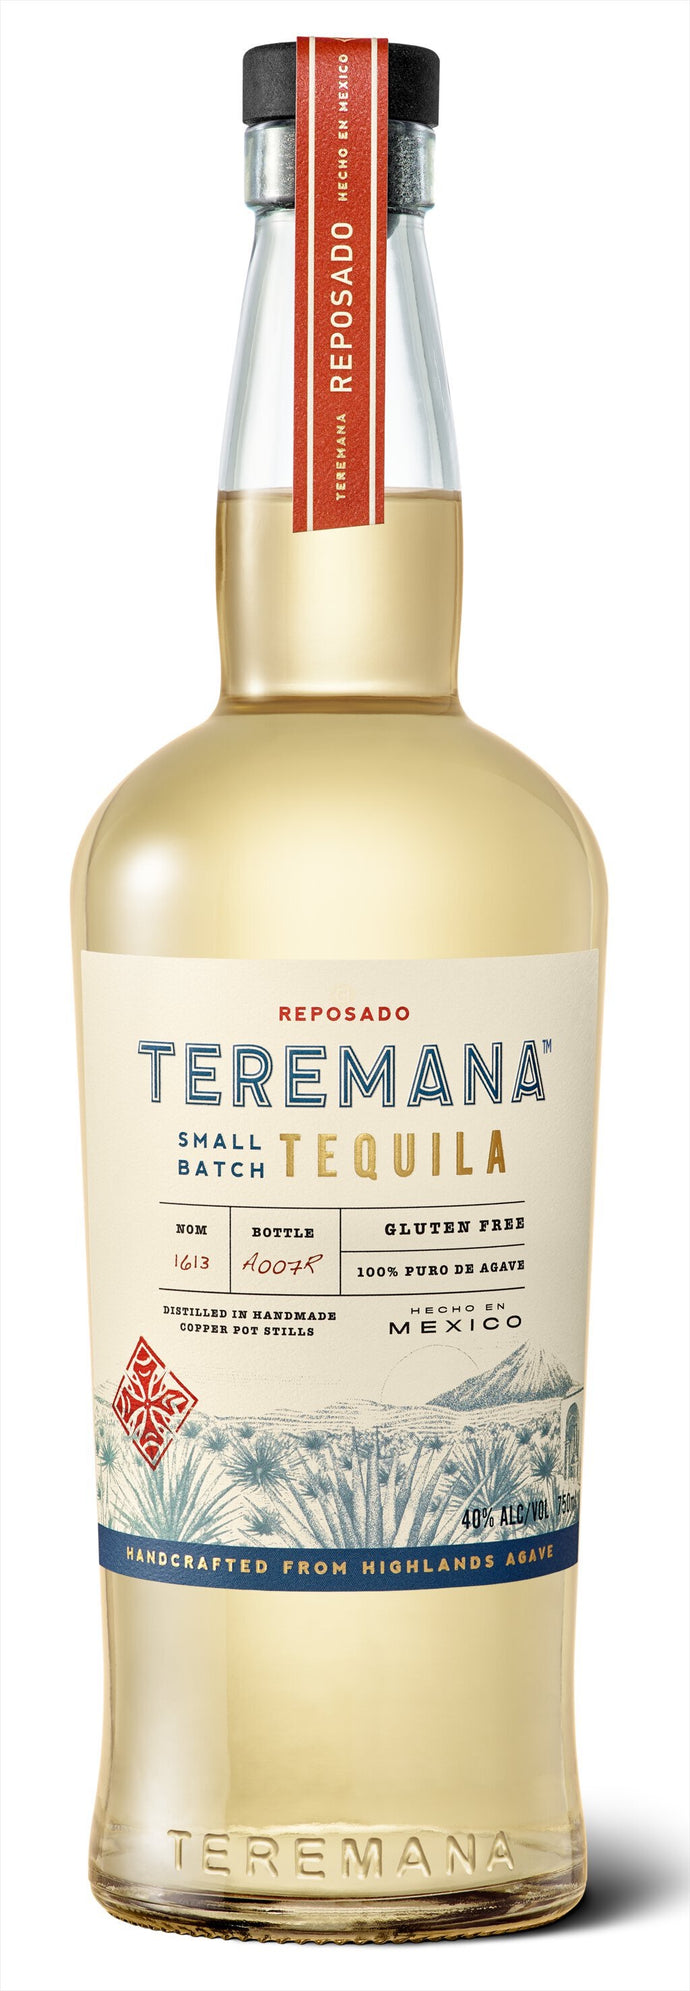 Teremana “The Rock” Reposado Tequila 375mL